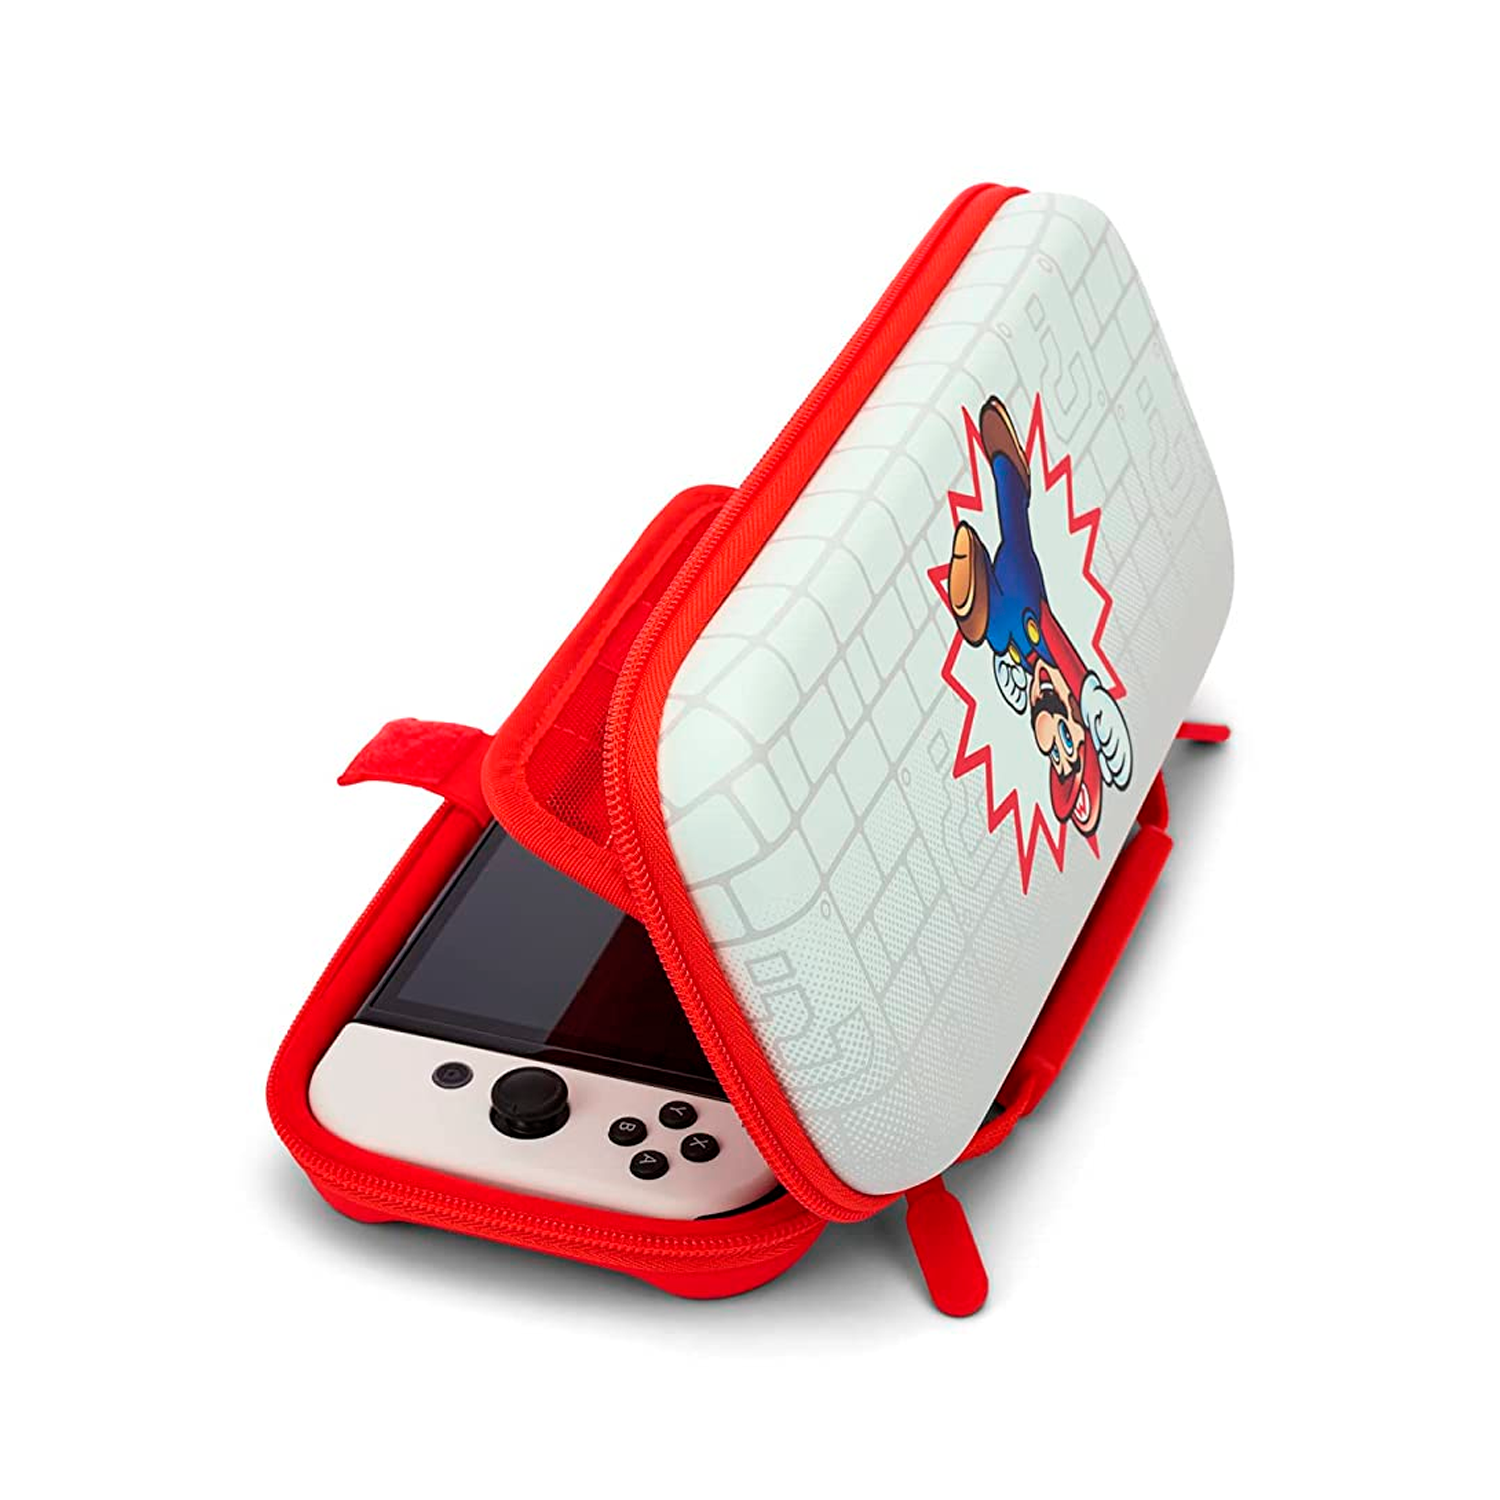 Case Protetor PowerA Brick Breaker Mario para Nintendo Switch Lite - (PWA-A-02854)